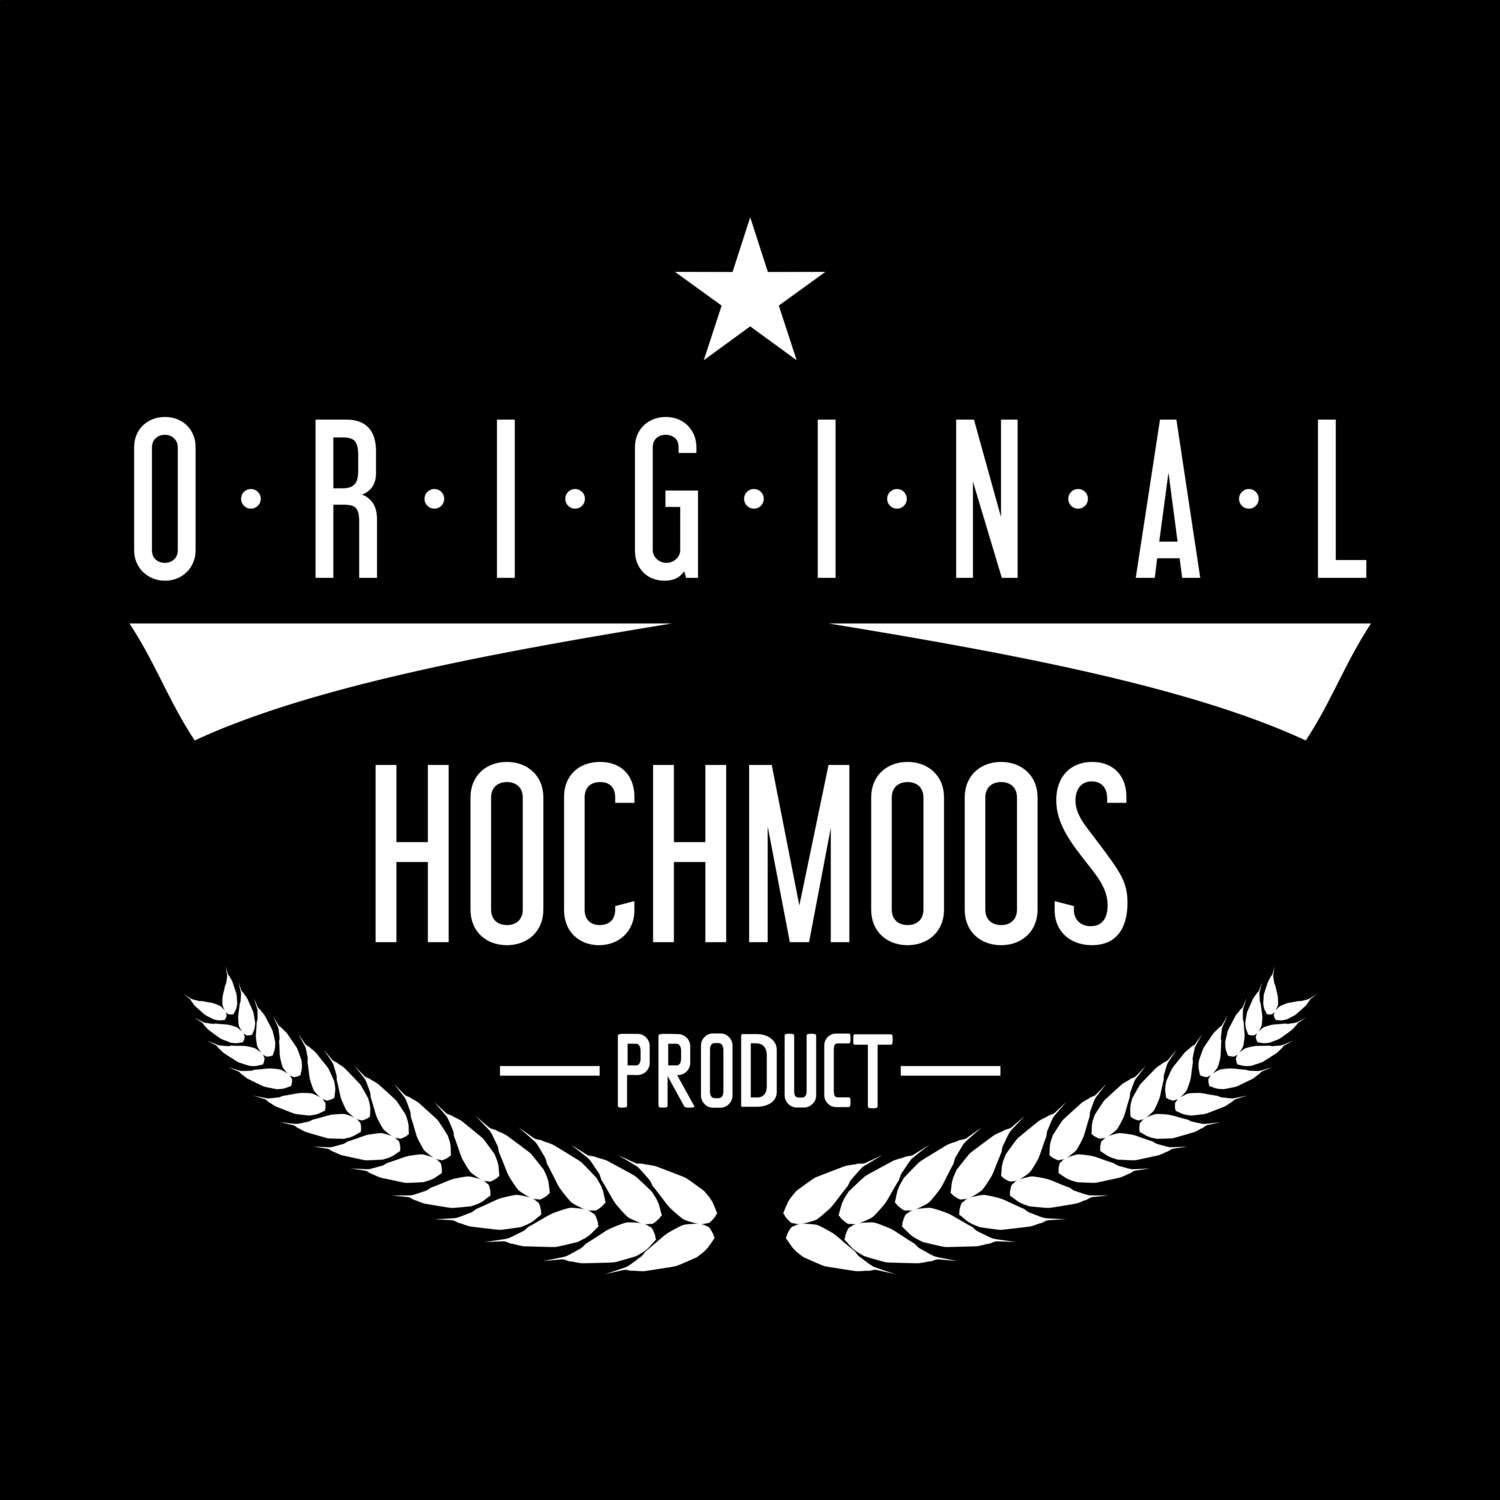 Hochmoos T-Shirt »Original Product«